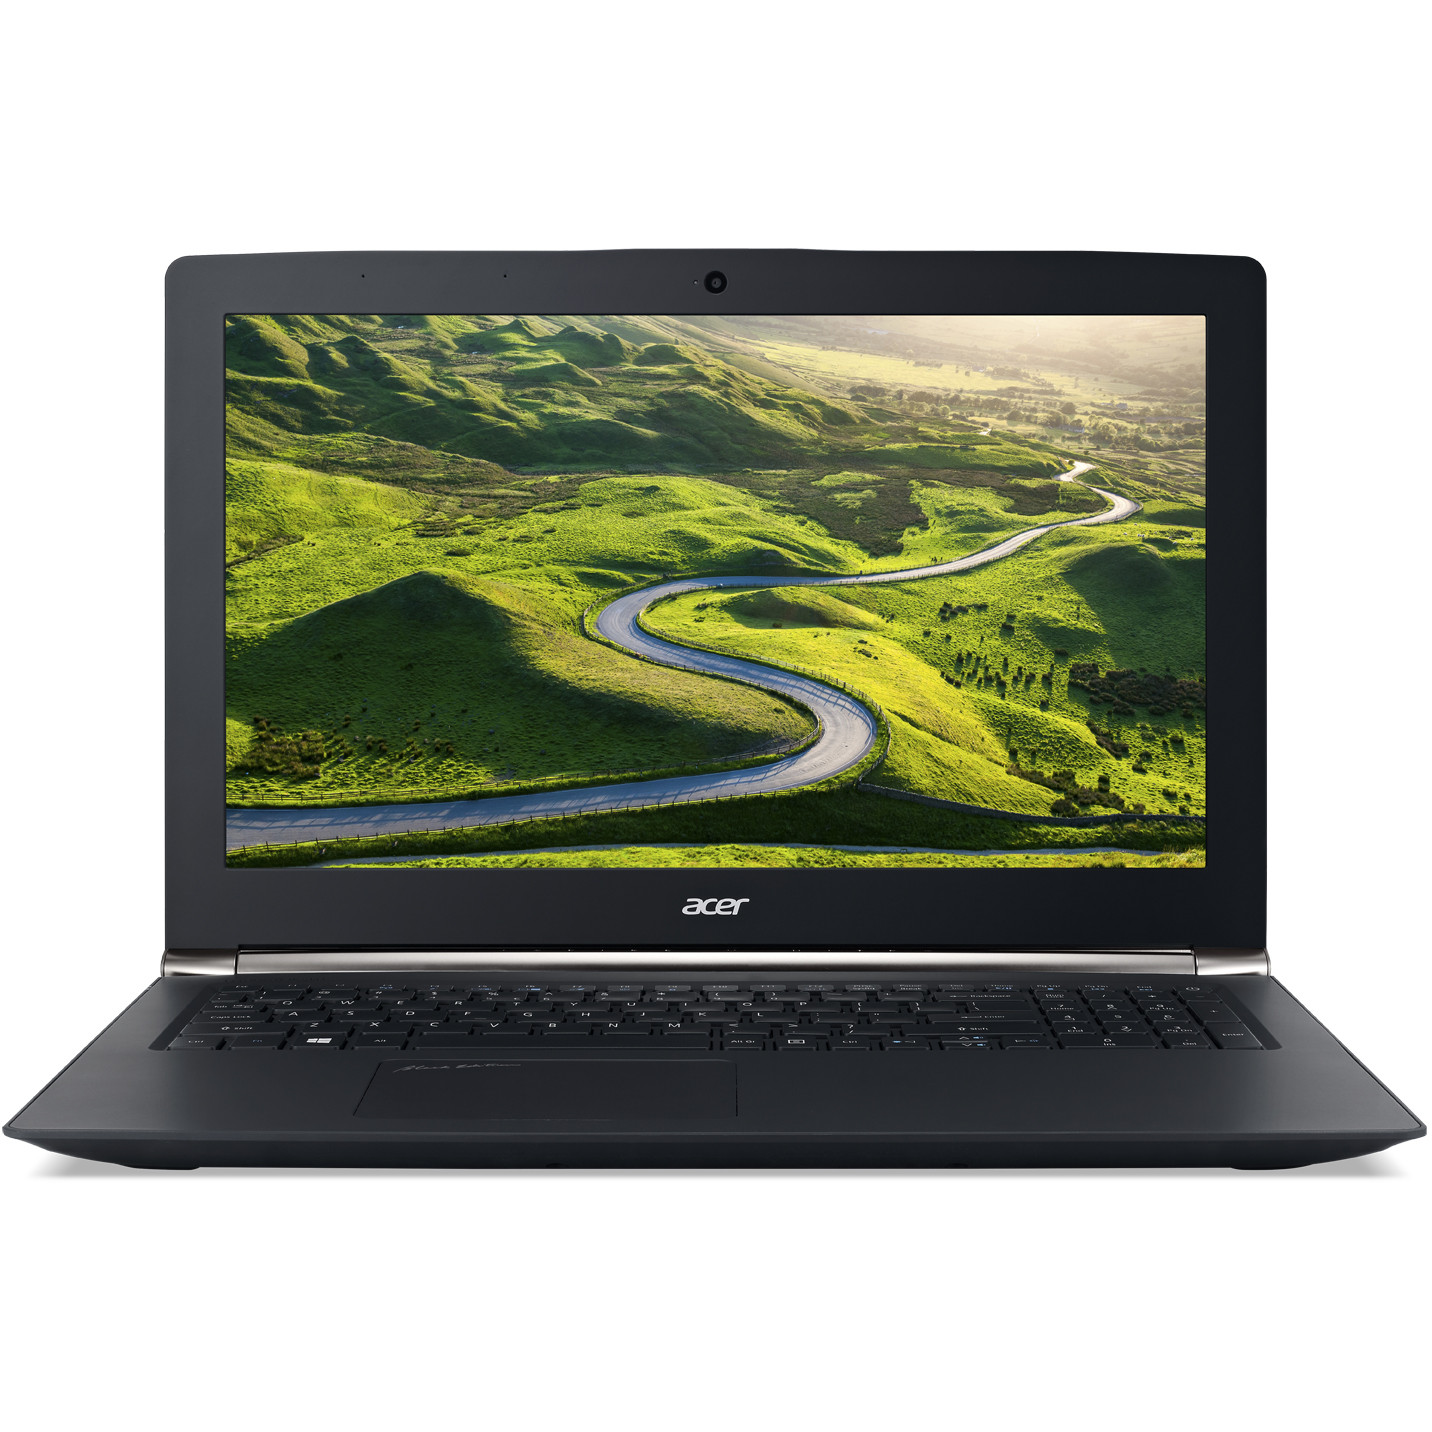  Laptop Acer Aspire VN7-592G, Intel Core i5-6300HQ, 8GB DDR4, HDD 1TB, nVidia GeForce GTX 960M 2GB, Linux 